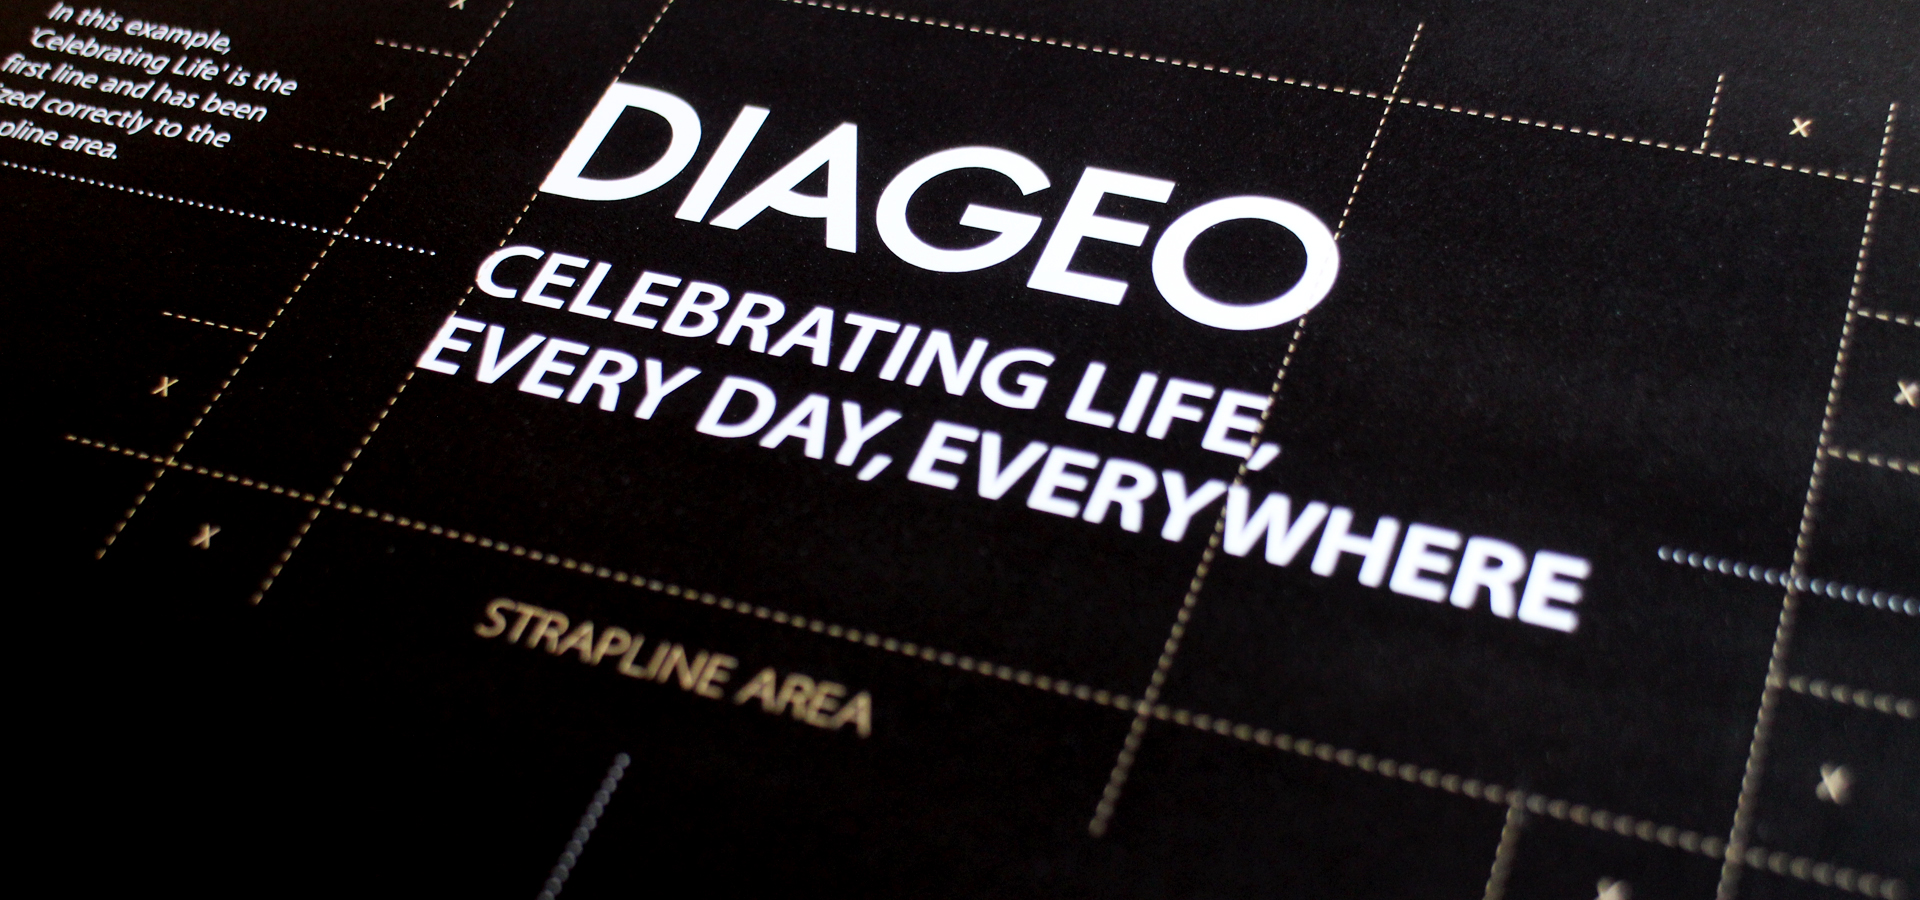 Diageo Brand Toolkit